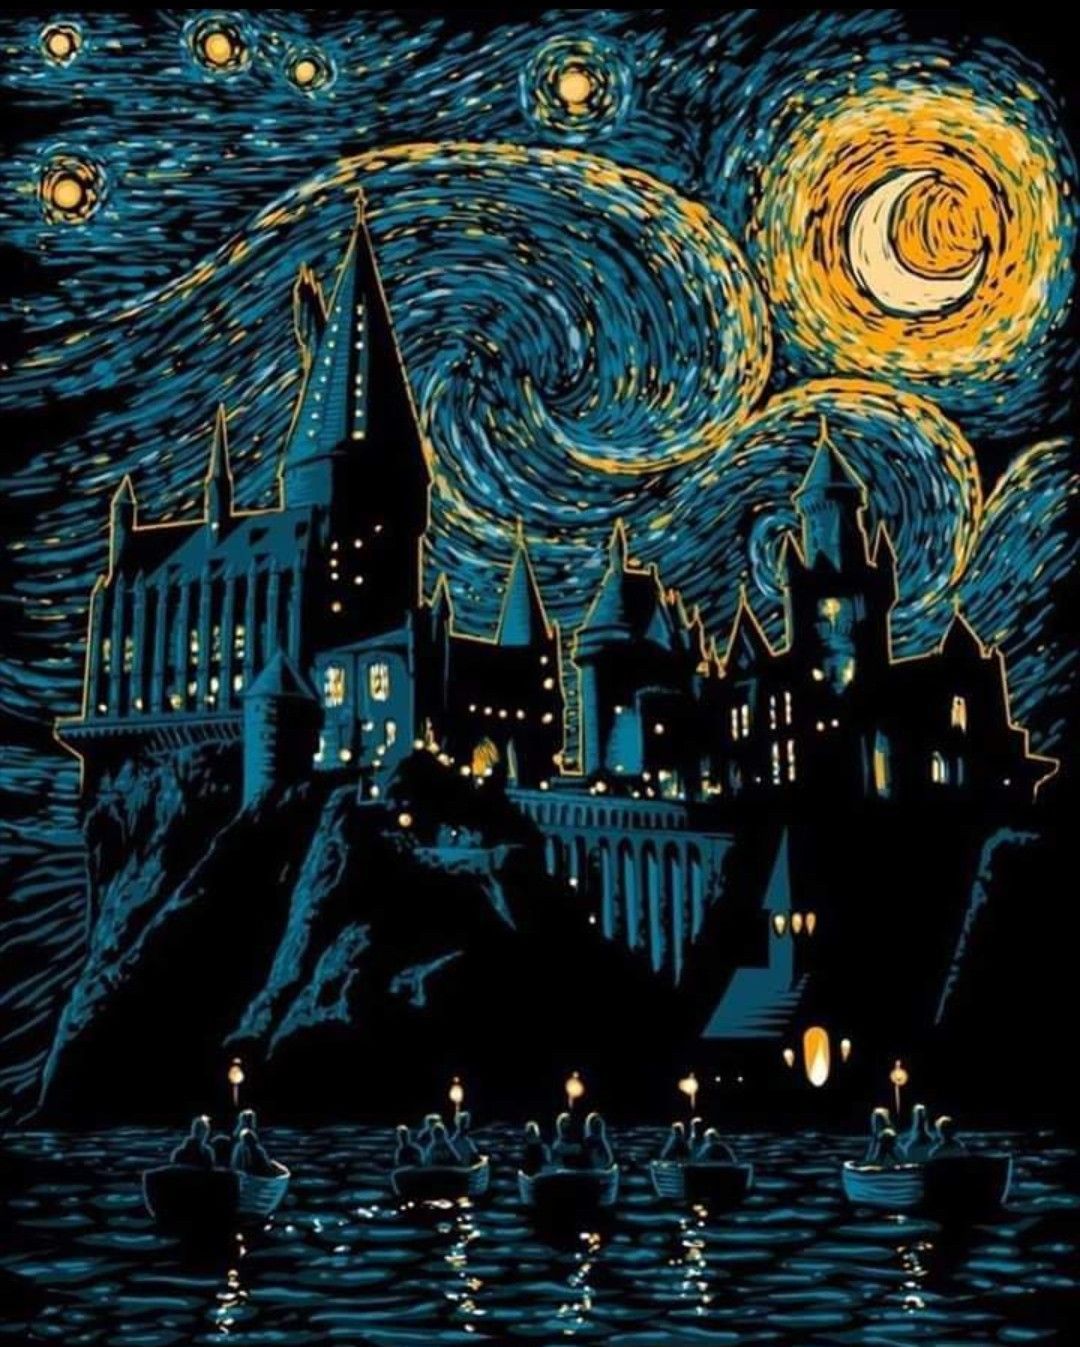 Hogwarts starry night. Harry potter wallpaper, Harry potter art, Harry potter love